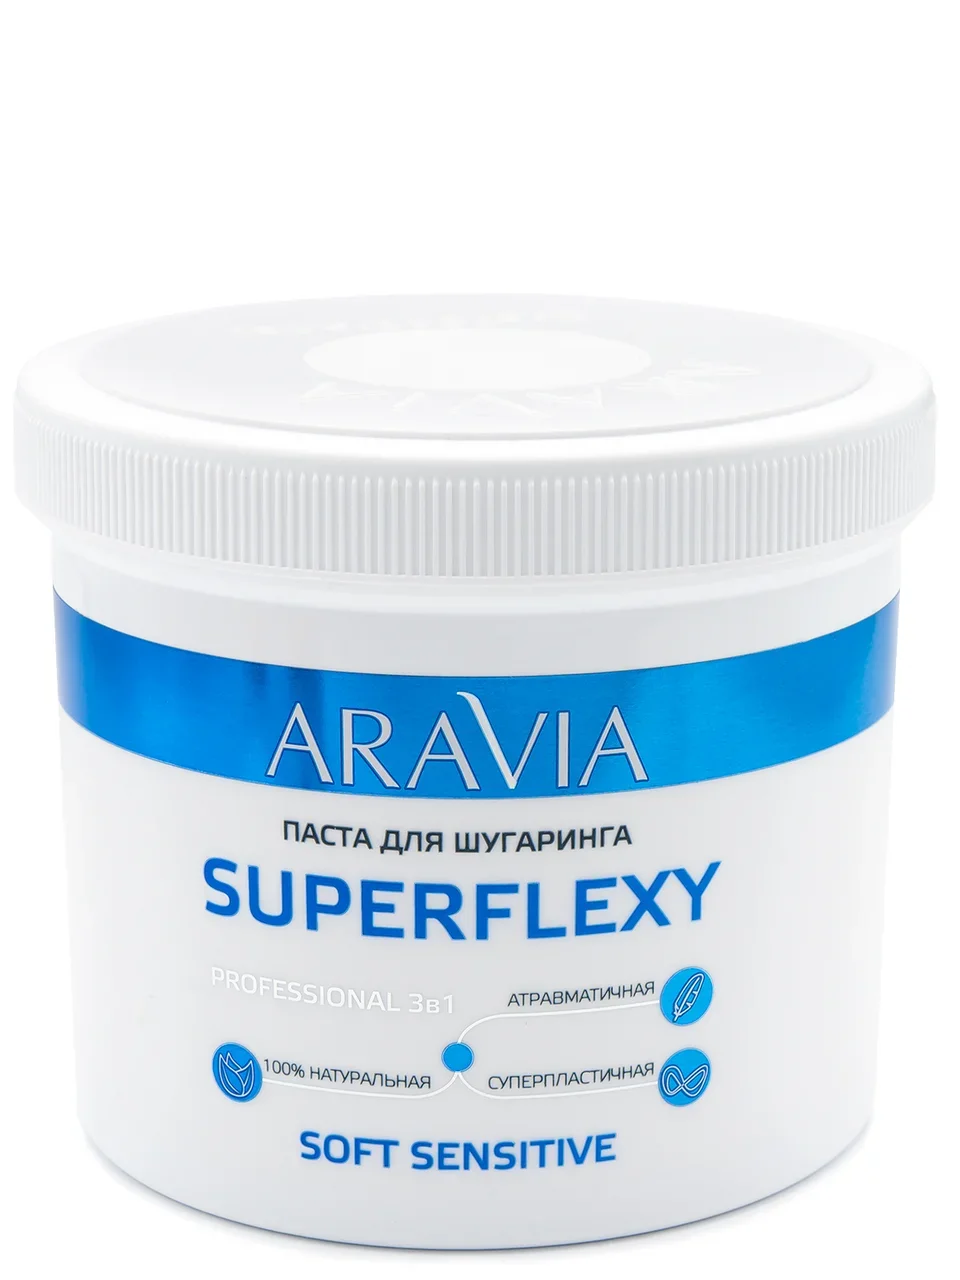 Паста для шугаринга Aravia Professional Superflexy Soft Sensitive 750 г aravia паста для шугаринга superflexy white cream 750 г